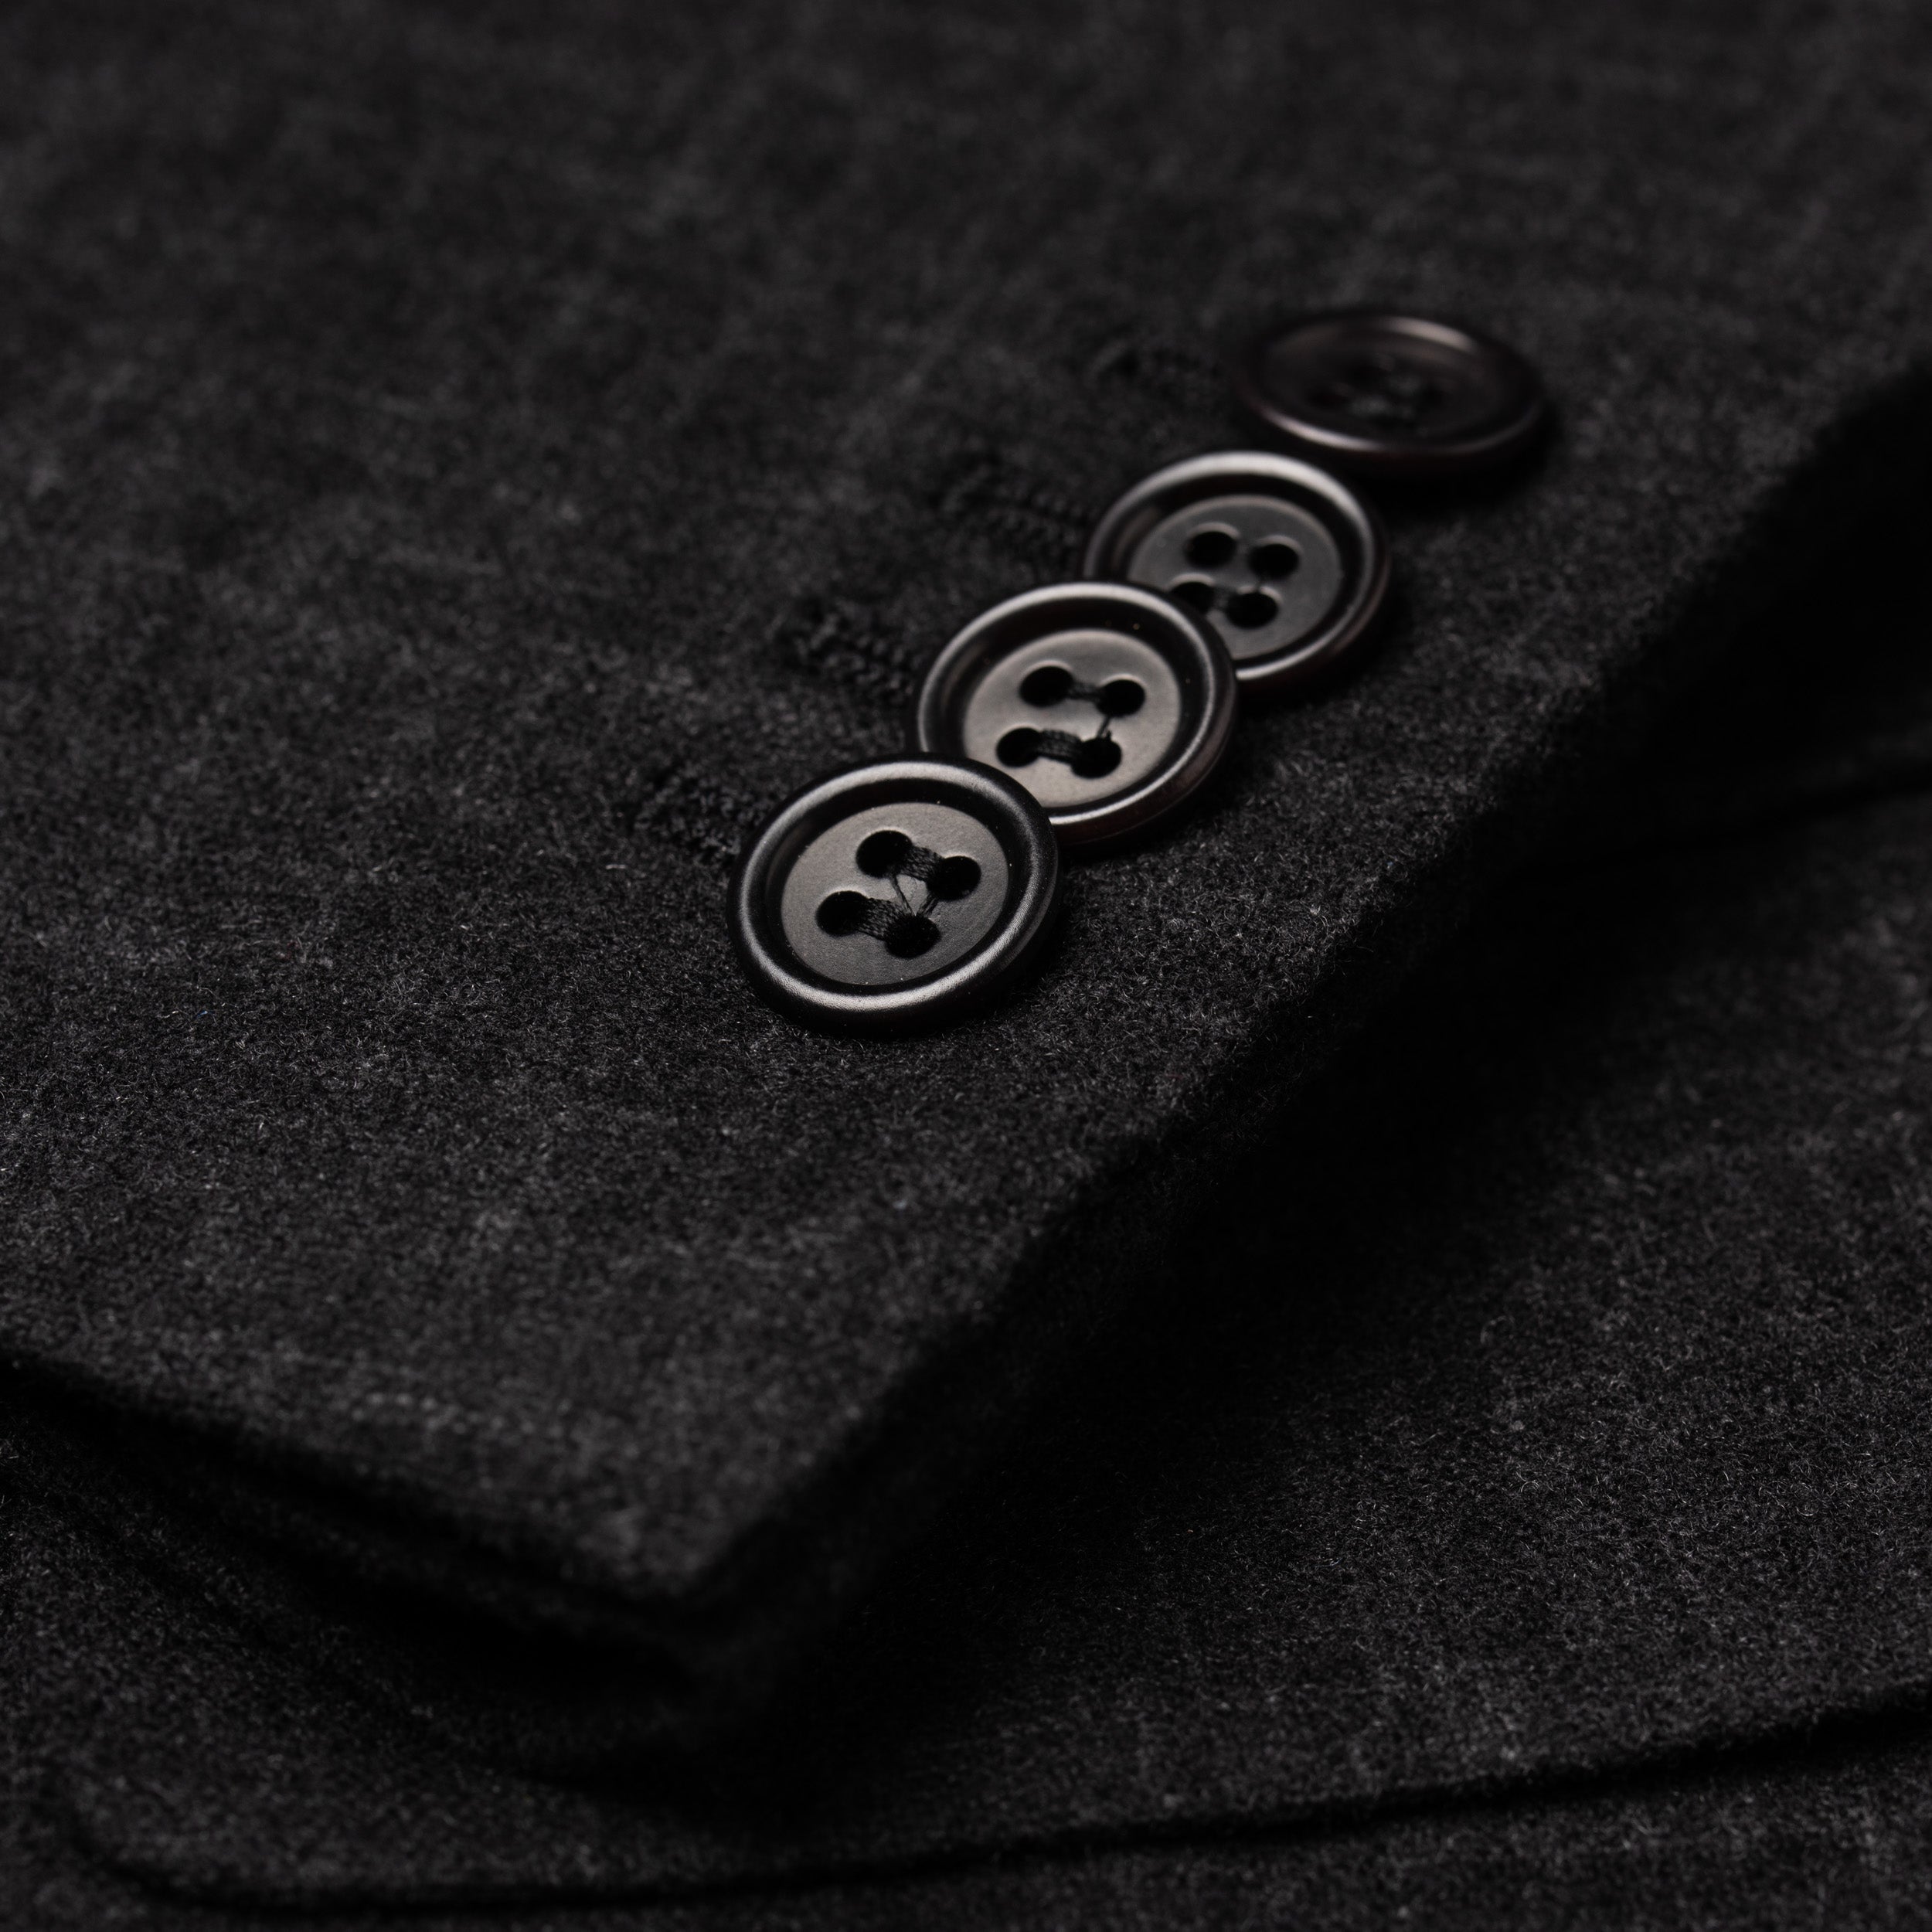 Sartoria PARTENOPEA Handmade Dark Gray Wool Flannel Jacket EU 50 NEW US 40 SARTORIA PARTENOPEA